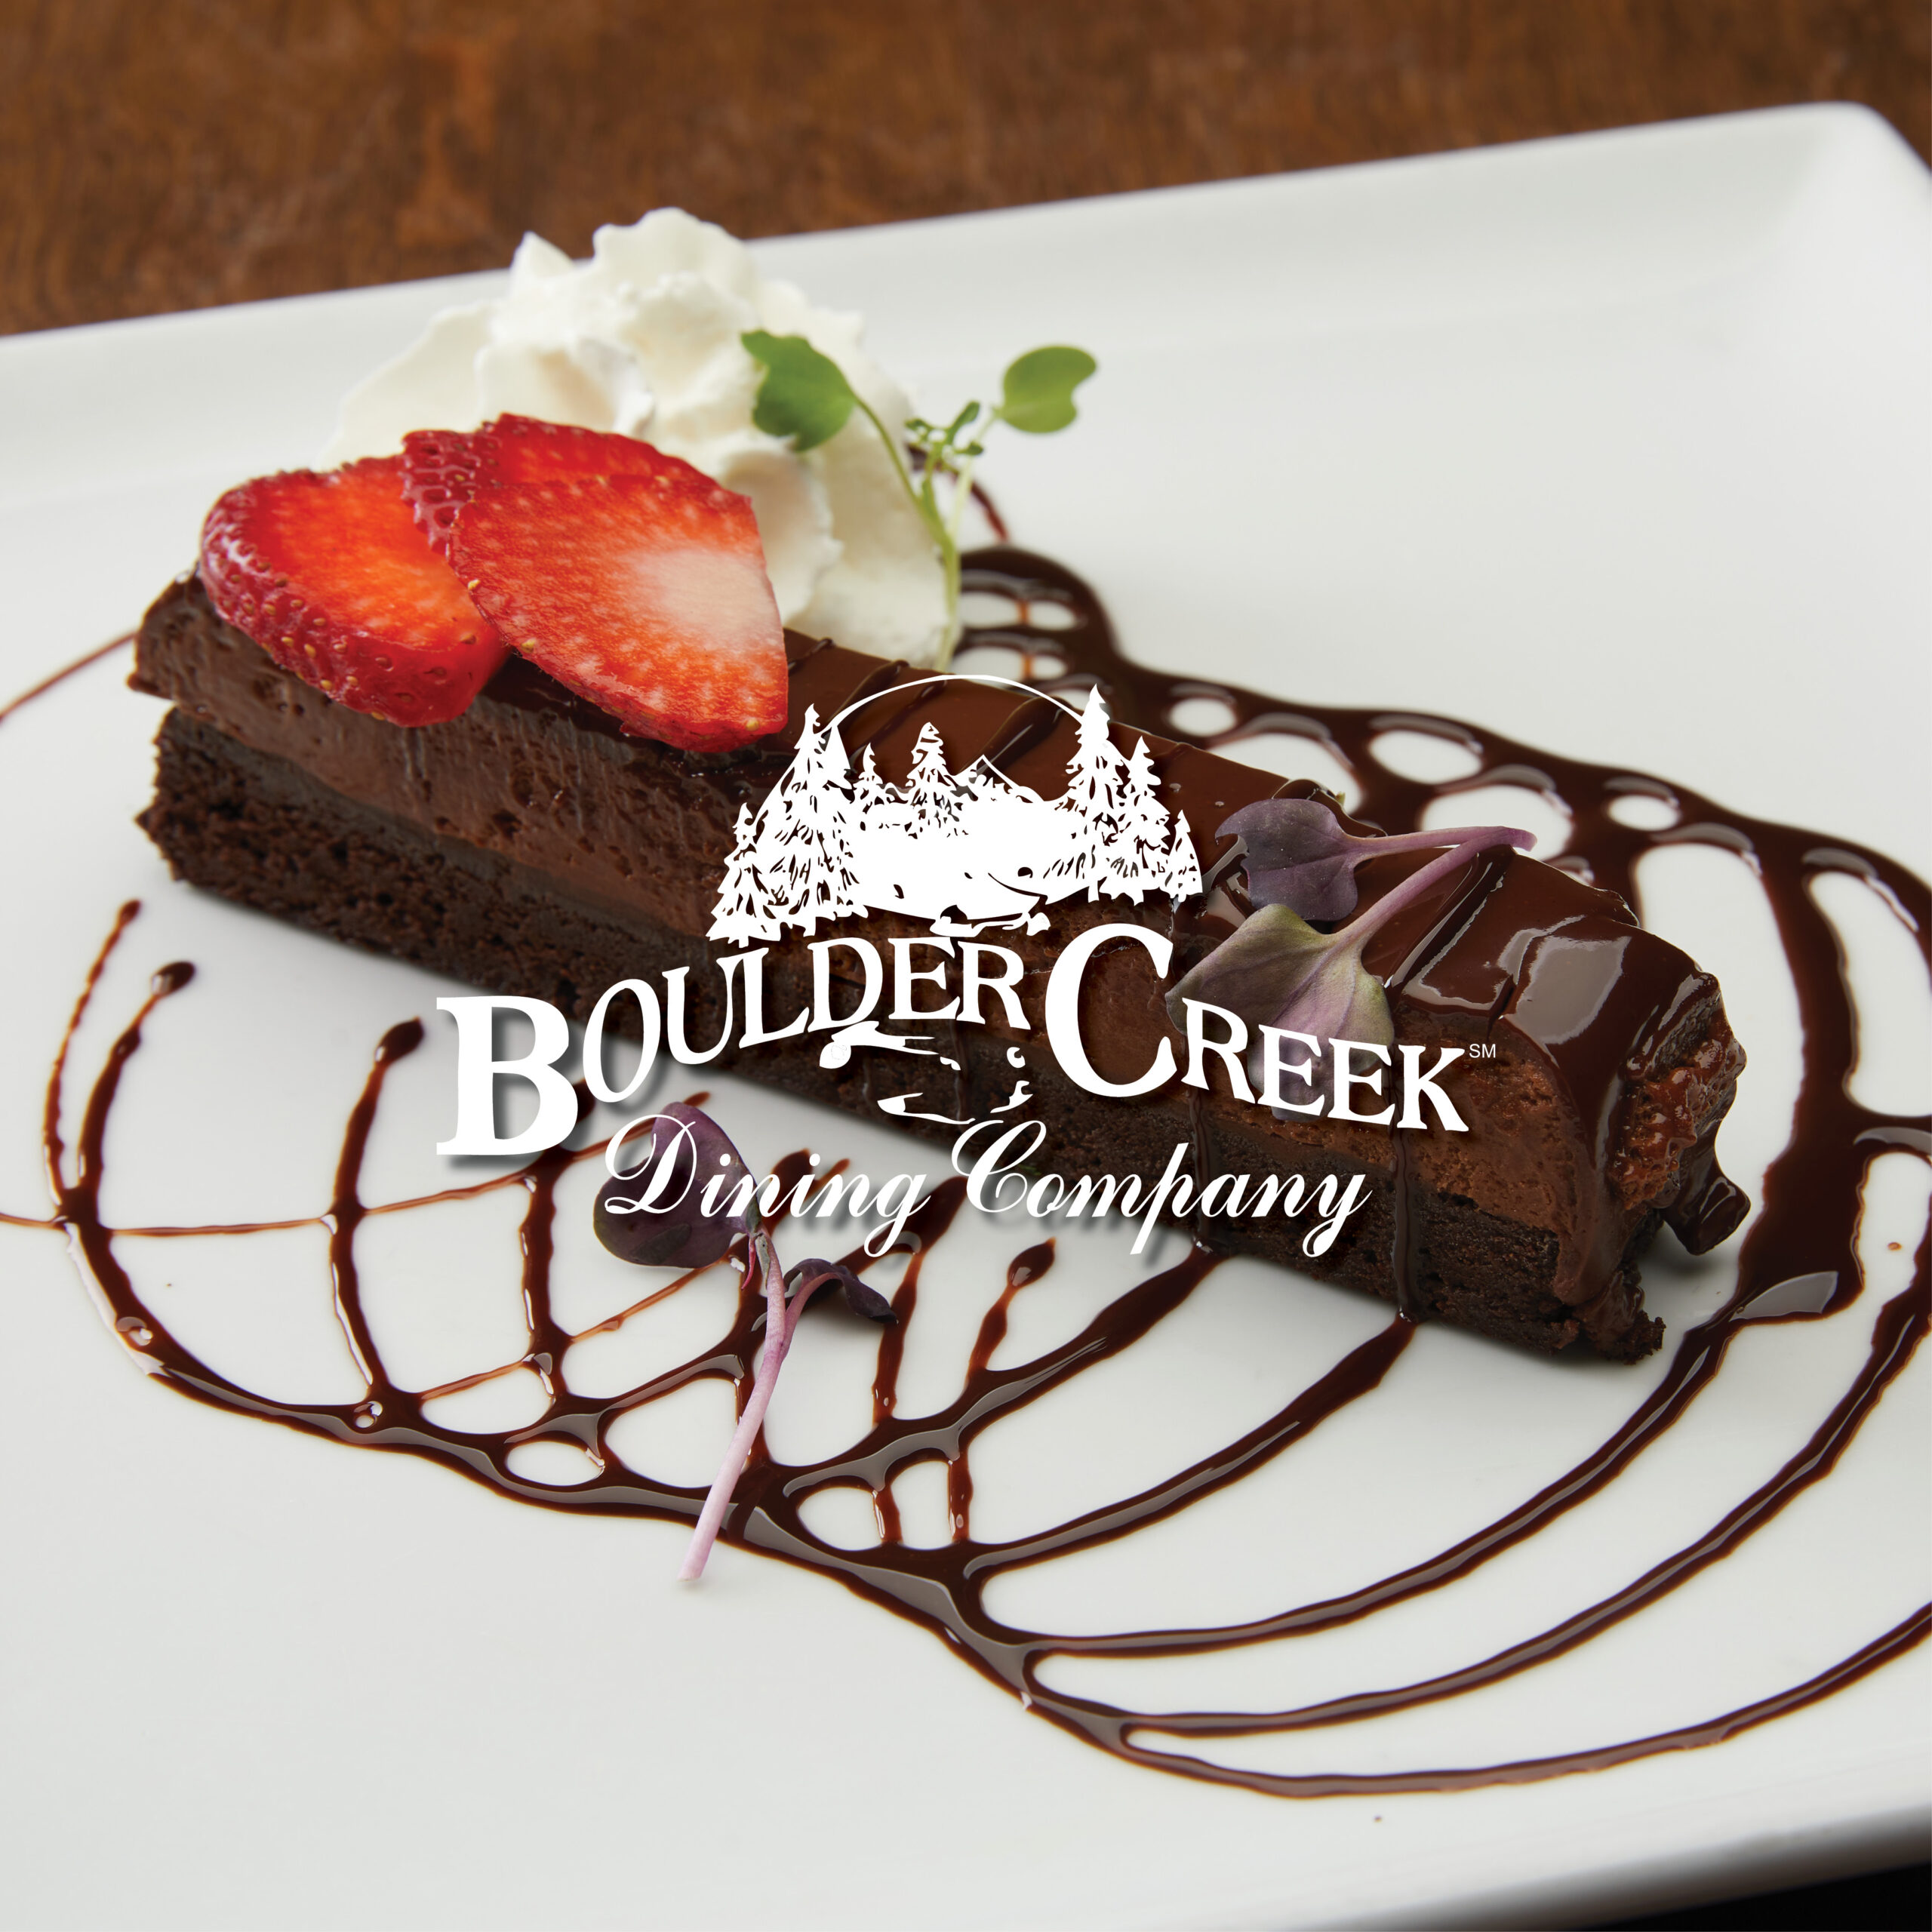 Boulder Creek Dining Company